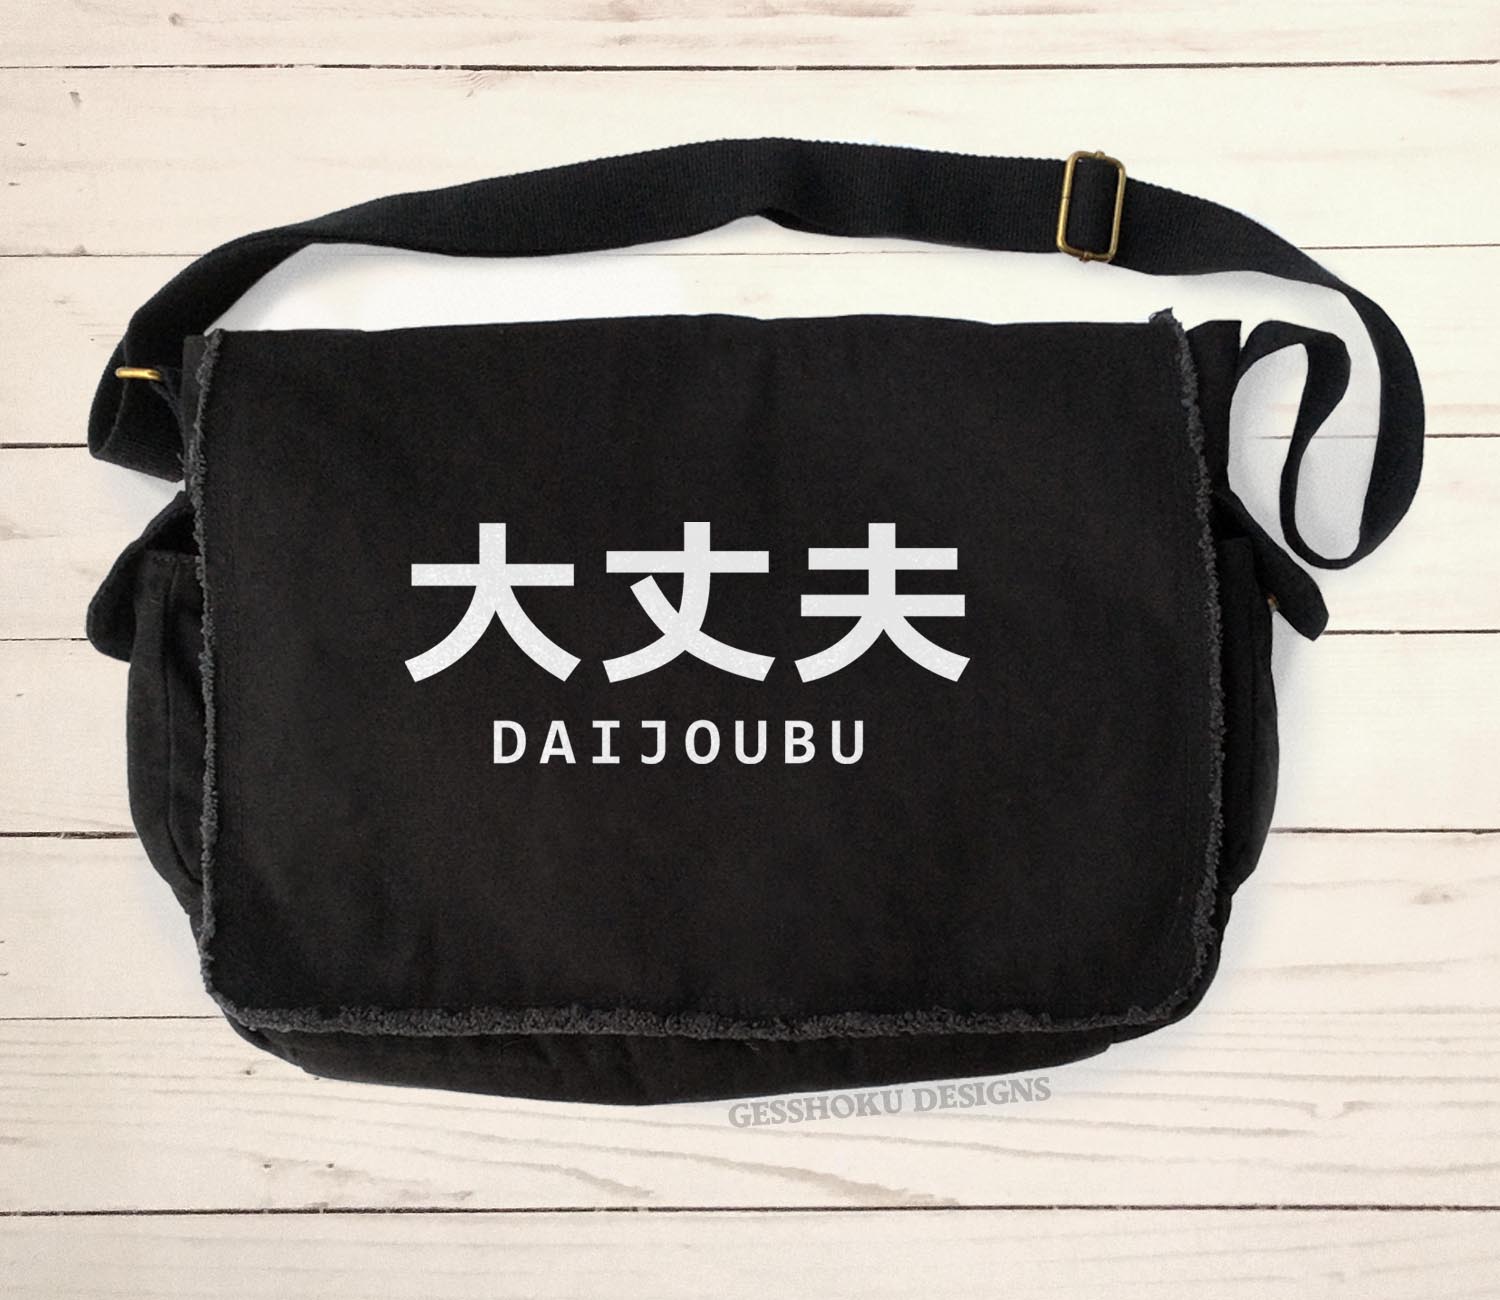 Daijoubu "It's Okay" Messenger Bag - Black